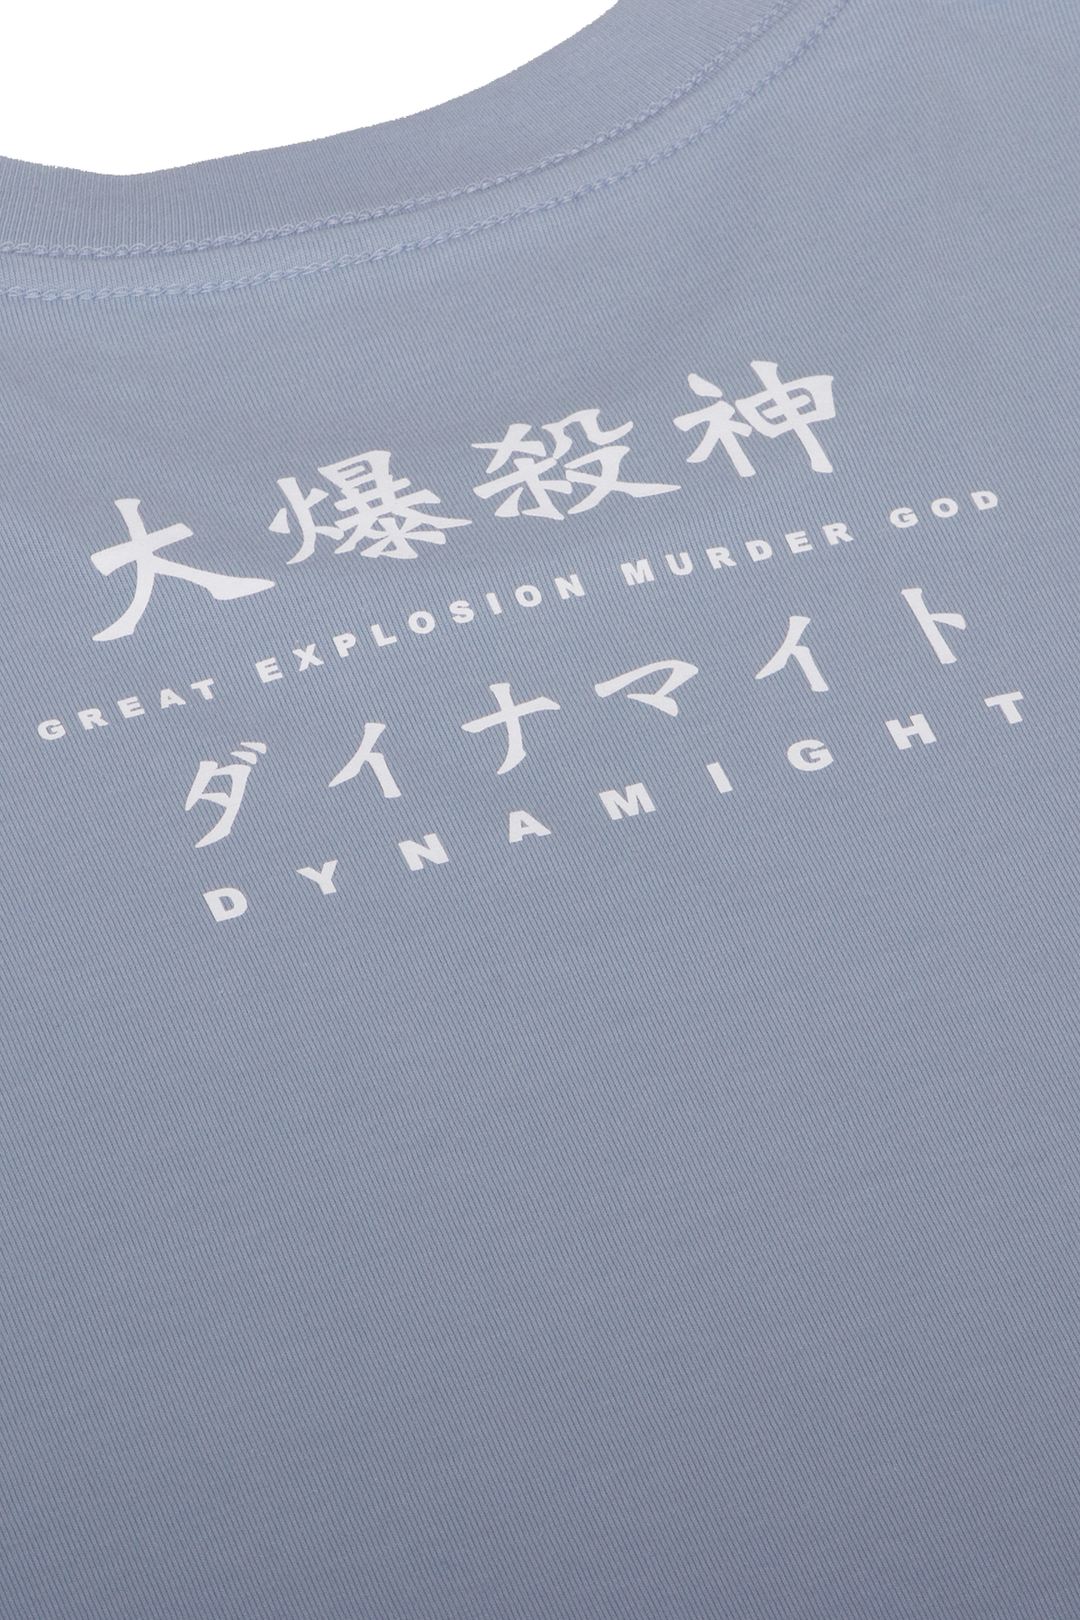 Back detail. My Hero Academia Bakugo Tee / Tshirt - Pale Blue